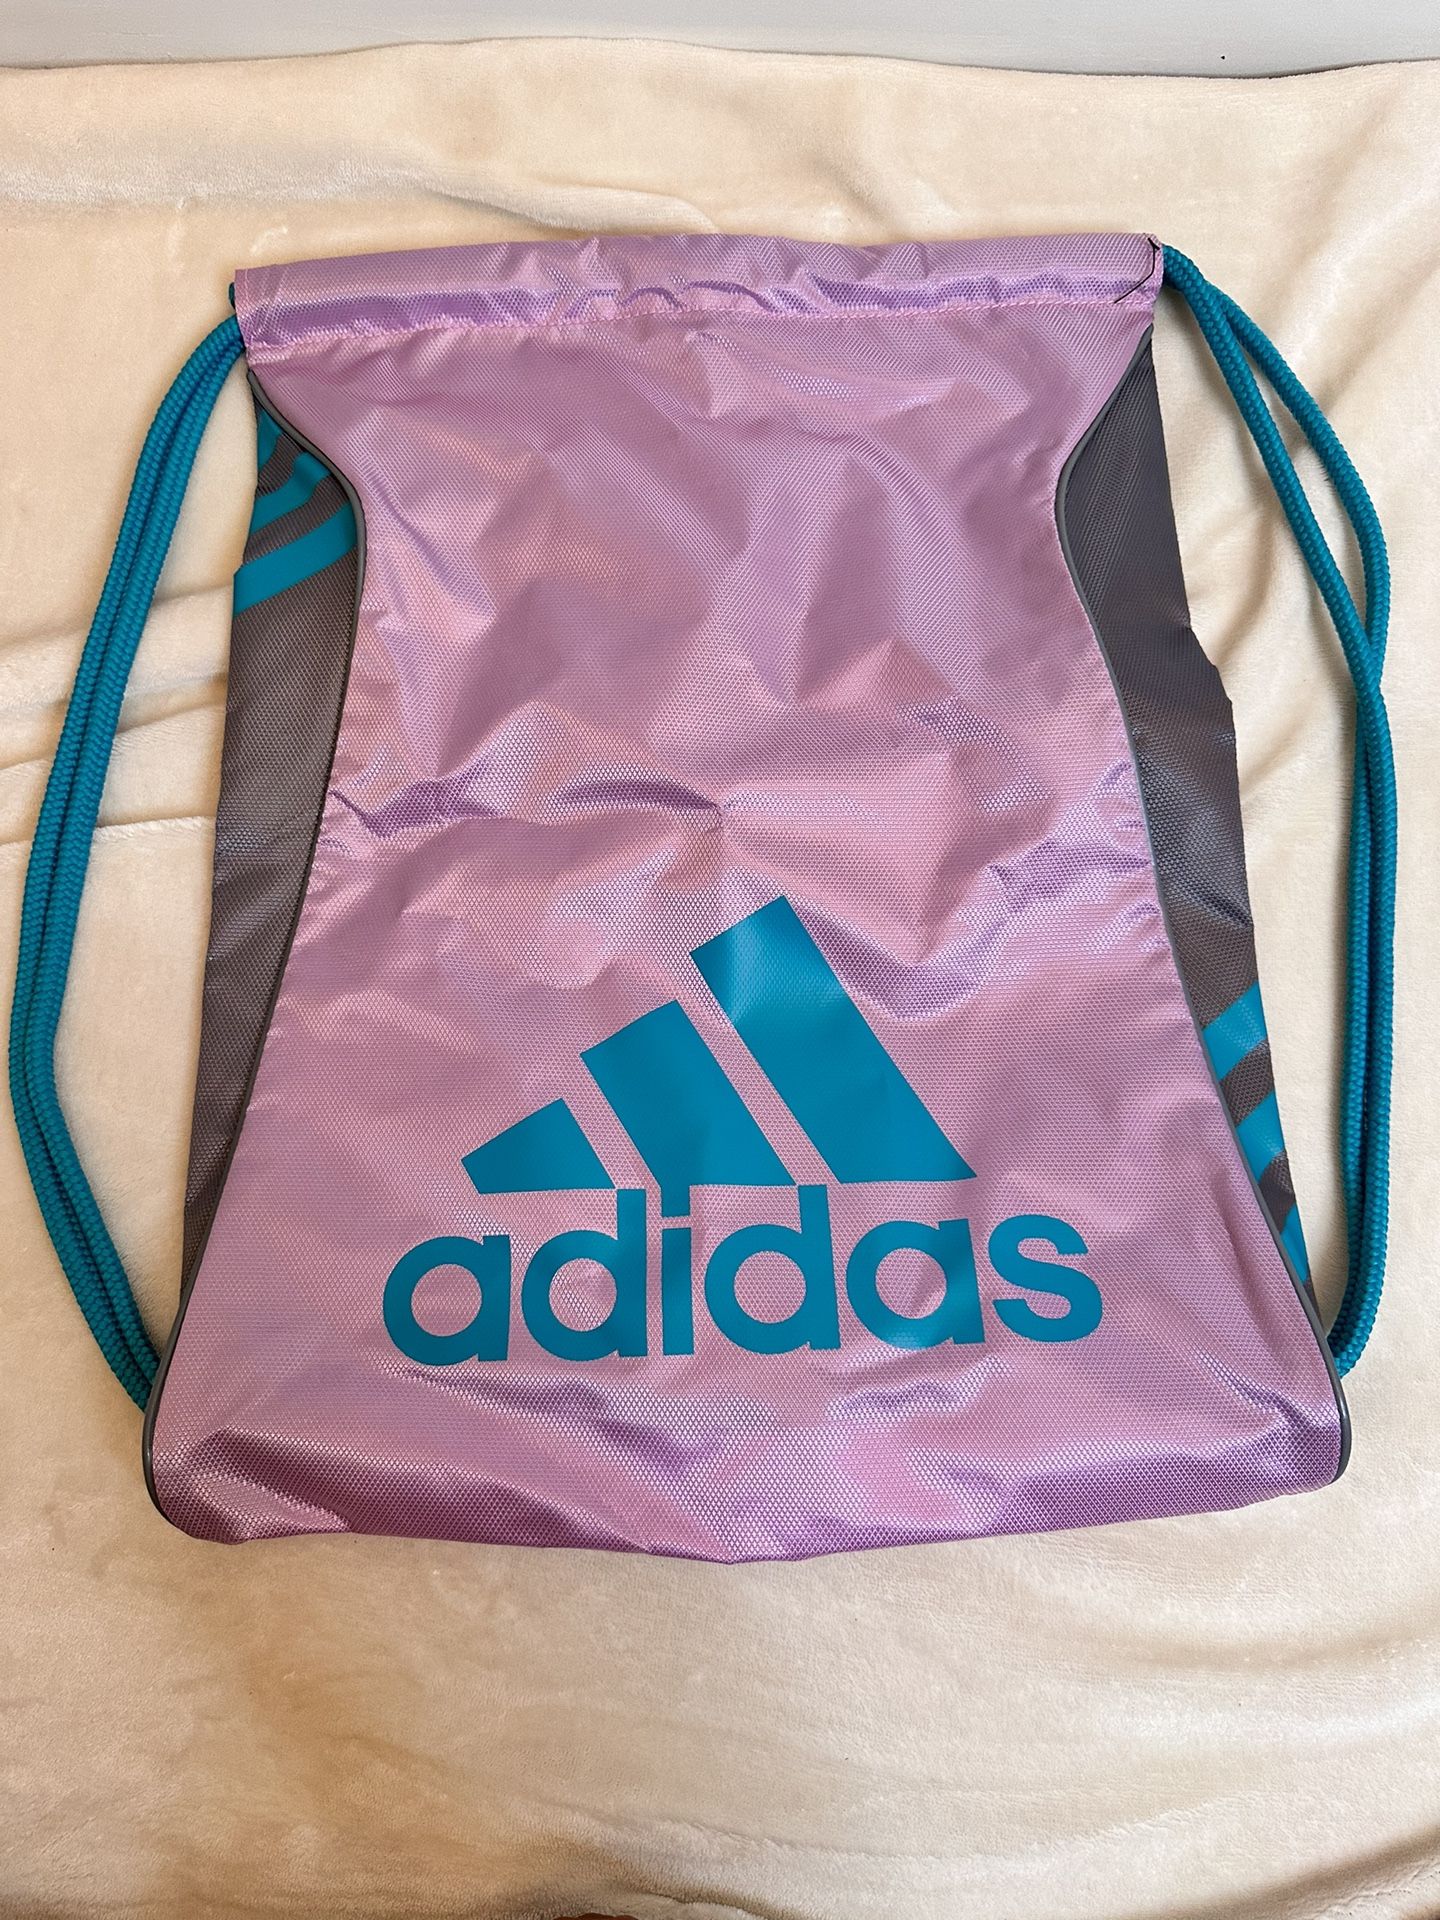 Adidas Drawstring Backpack | Pink/gray/teal/outdoor 